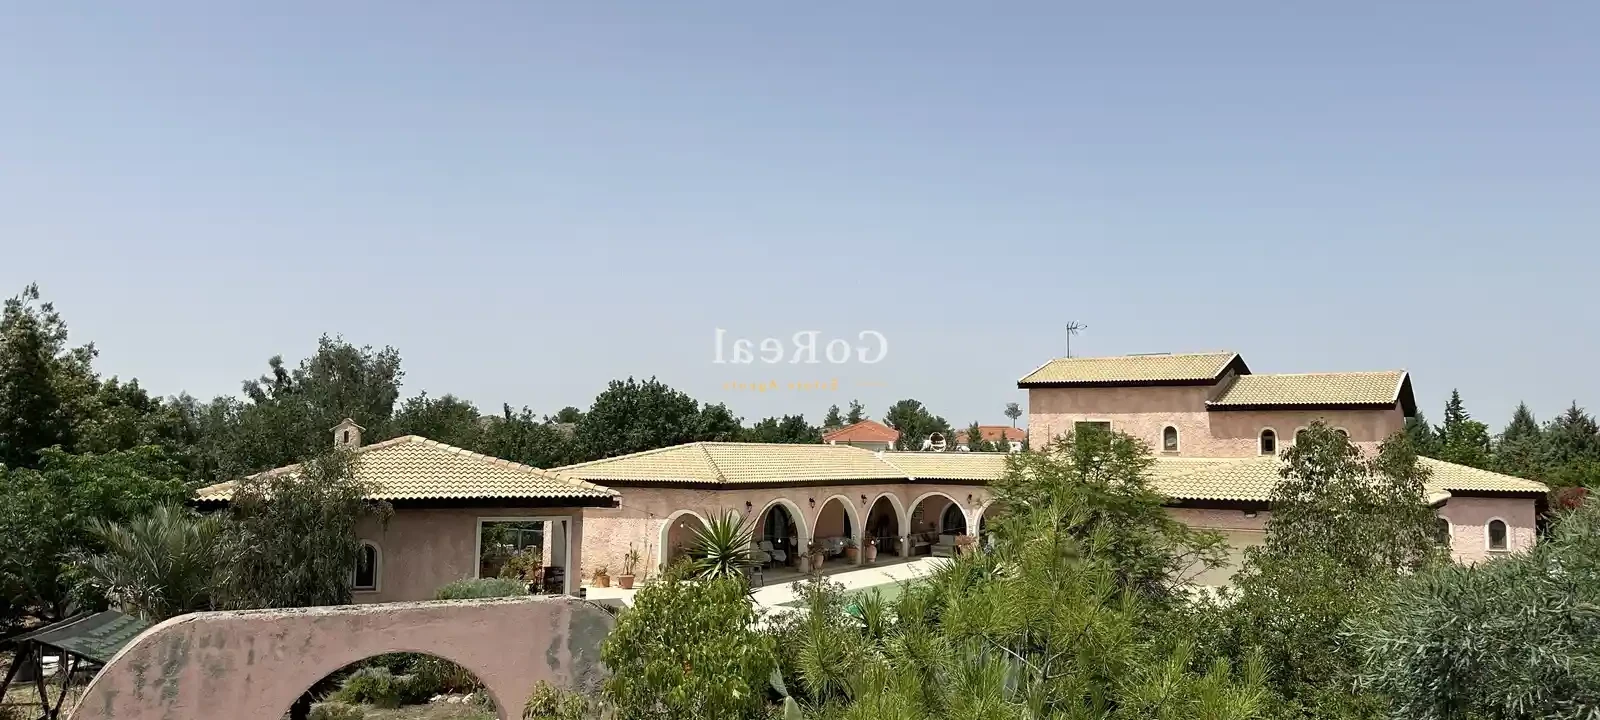 3-bedroom villa fоr sаle €875.000, image 1